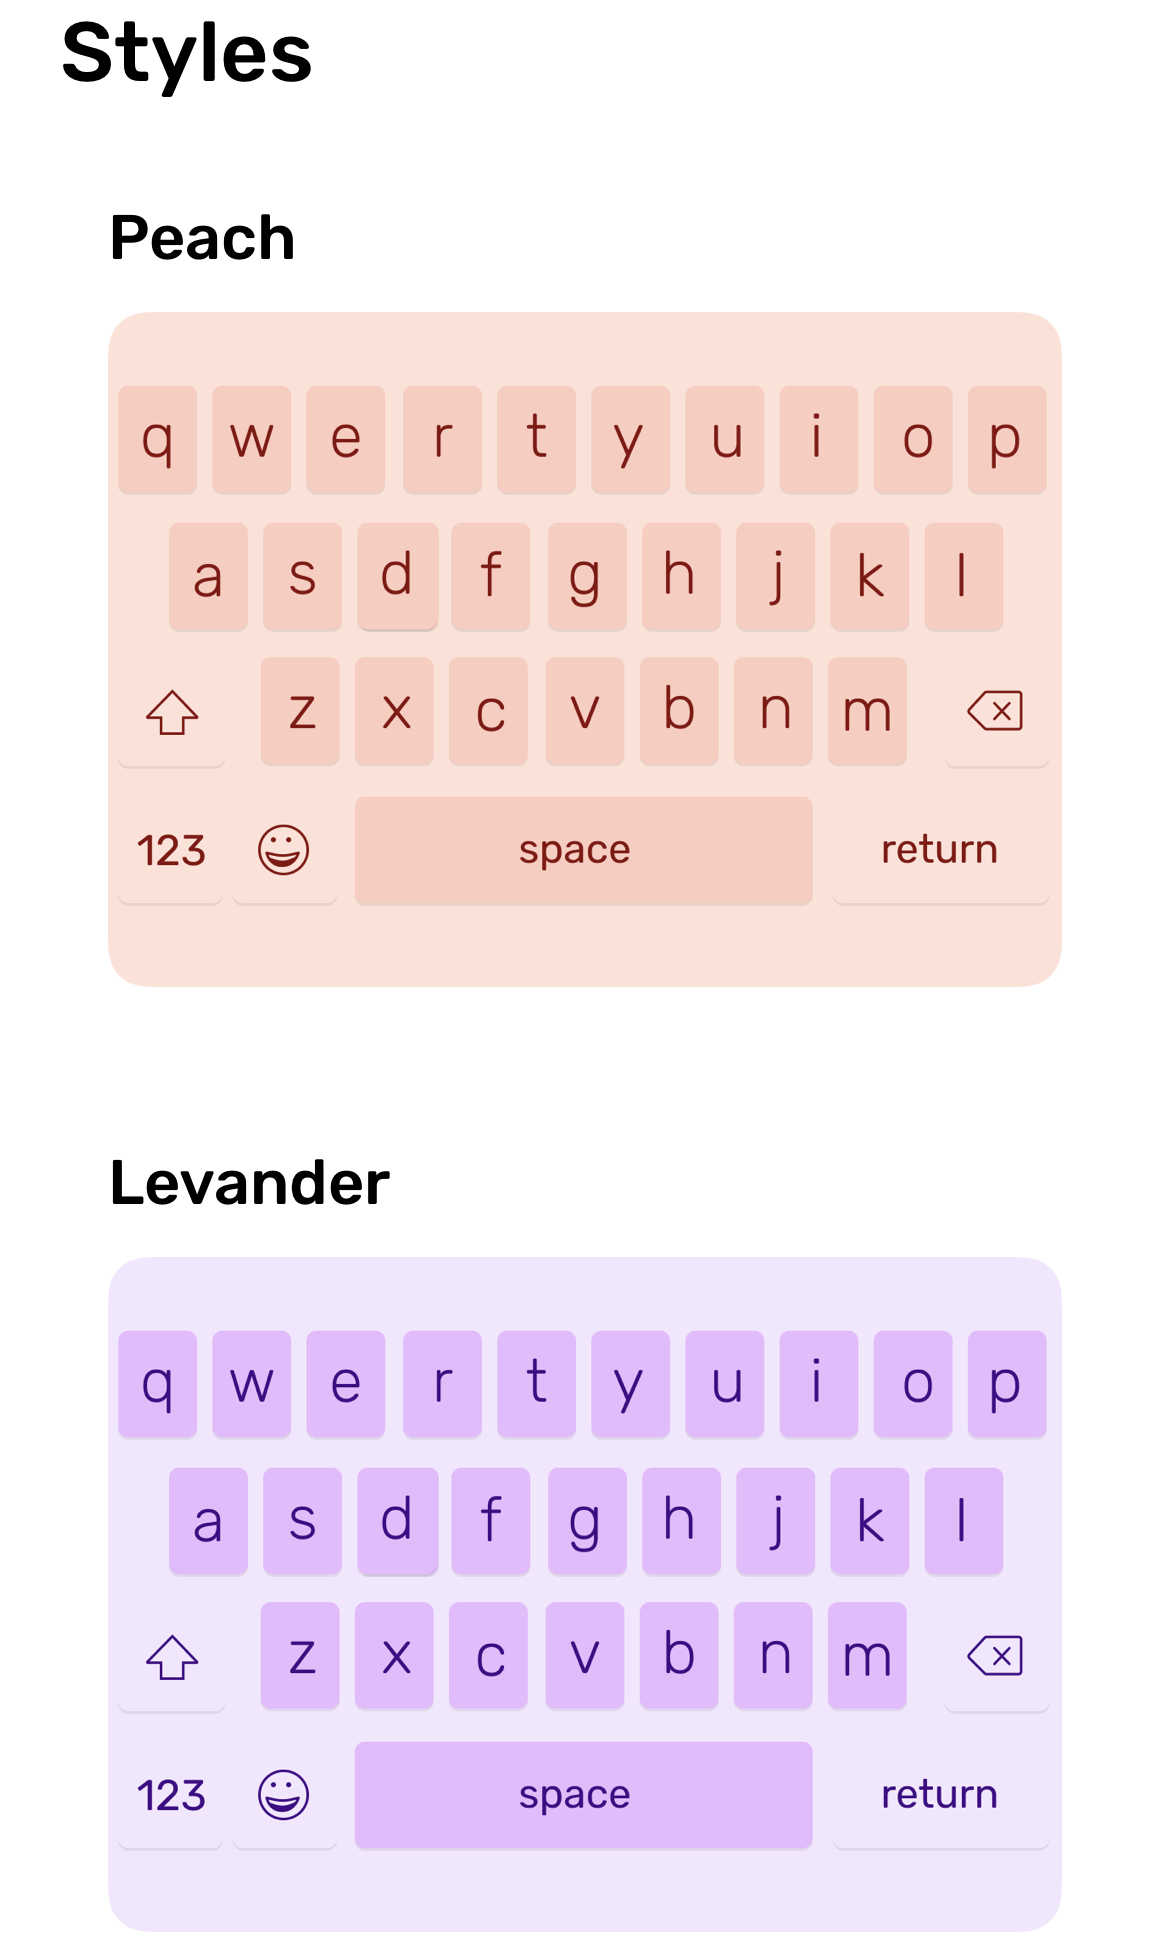 keyboard_styles.jpeg